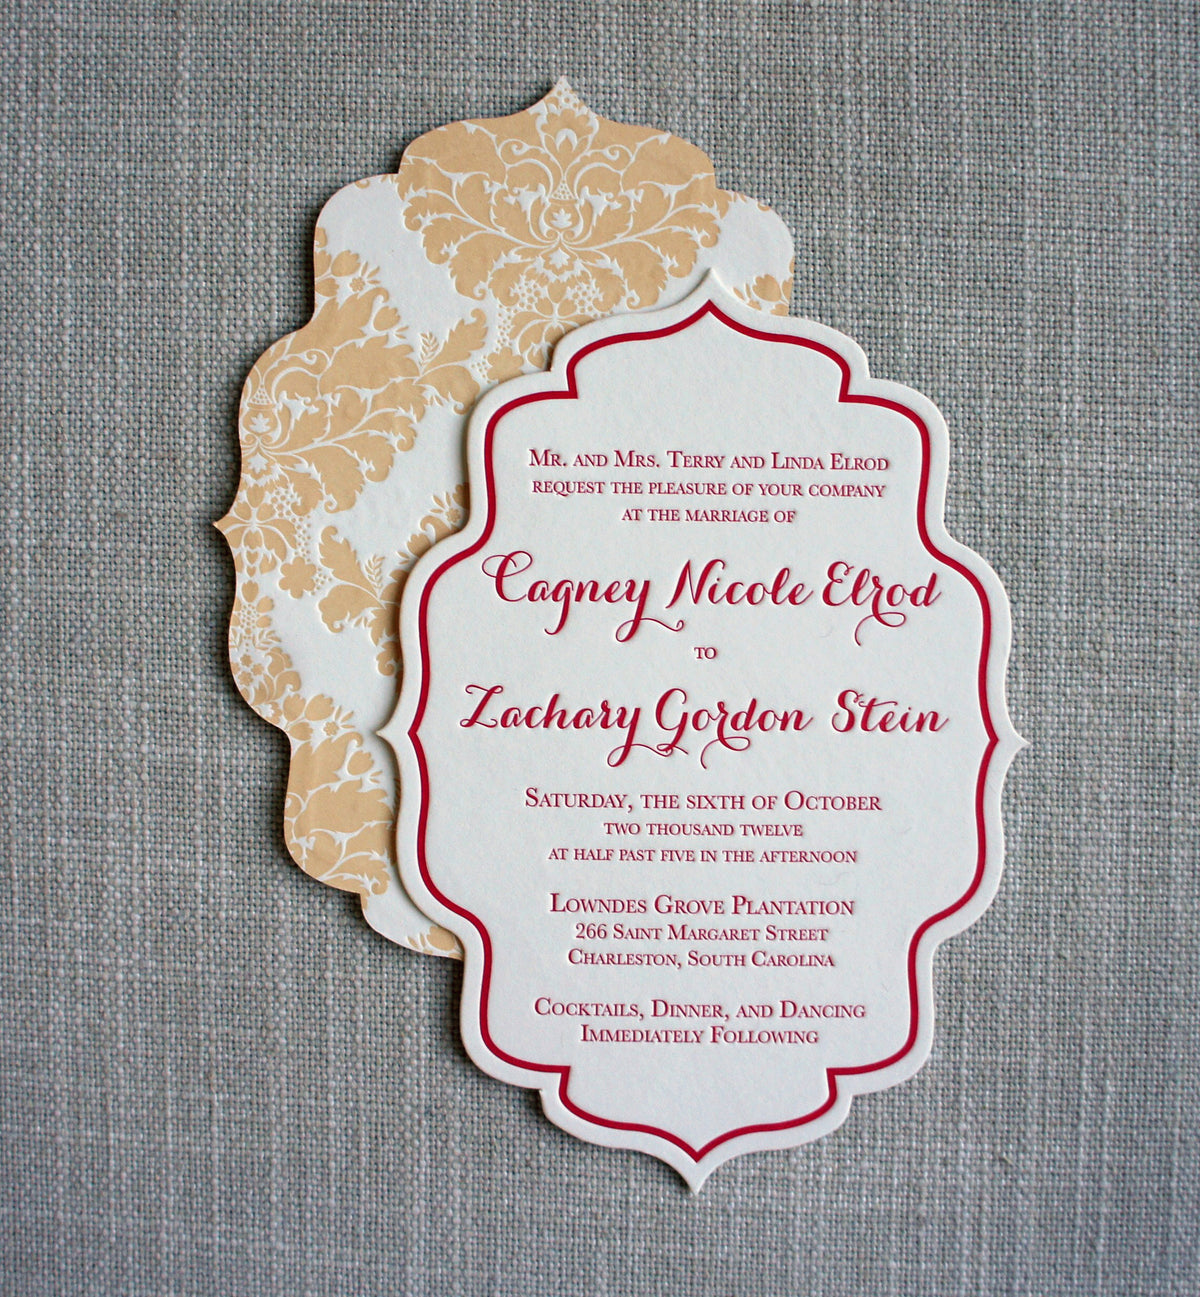 Die Cut Letterpress Wedding Invitation shown with reverse side of invitation